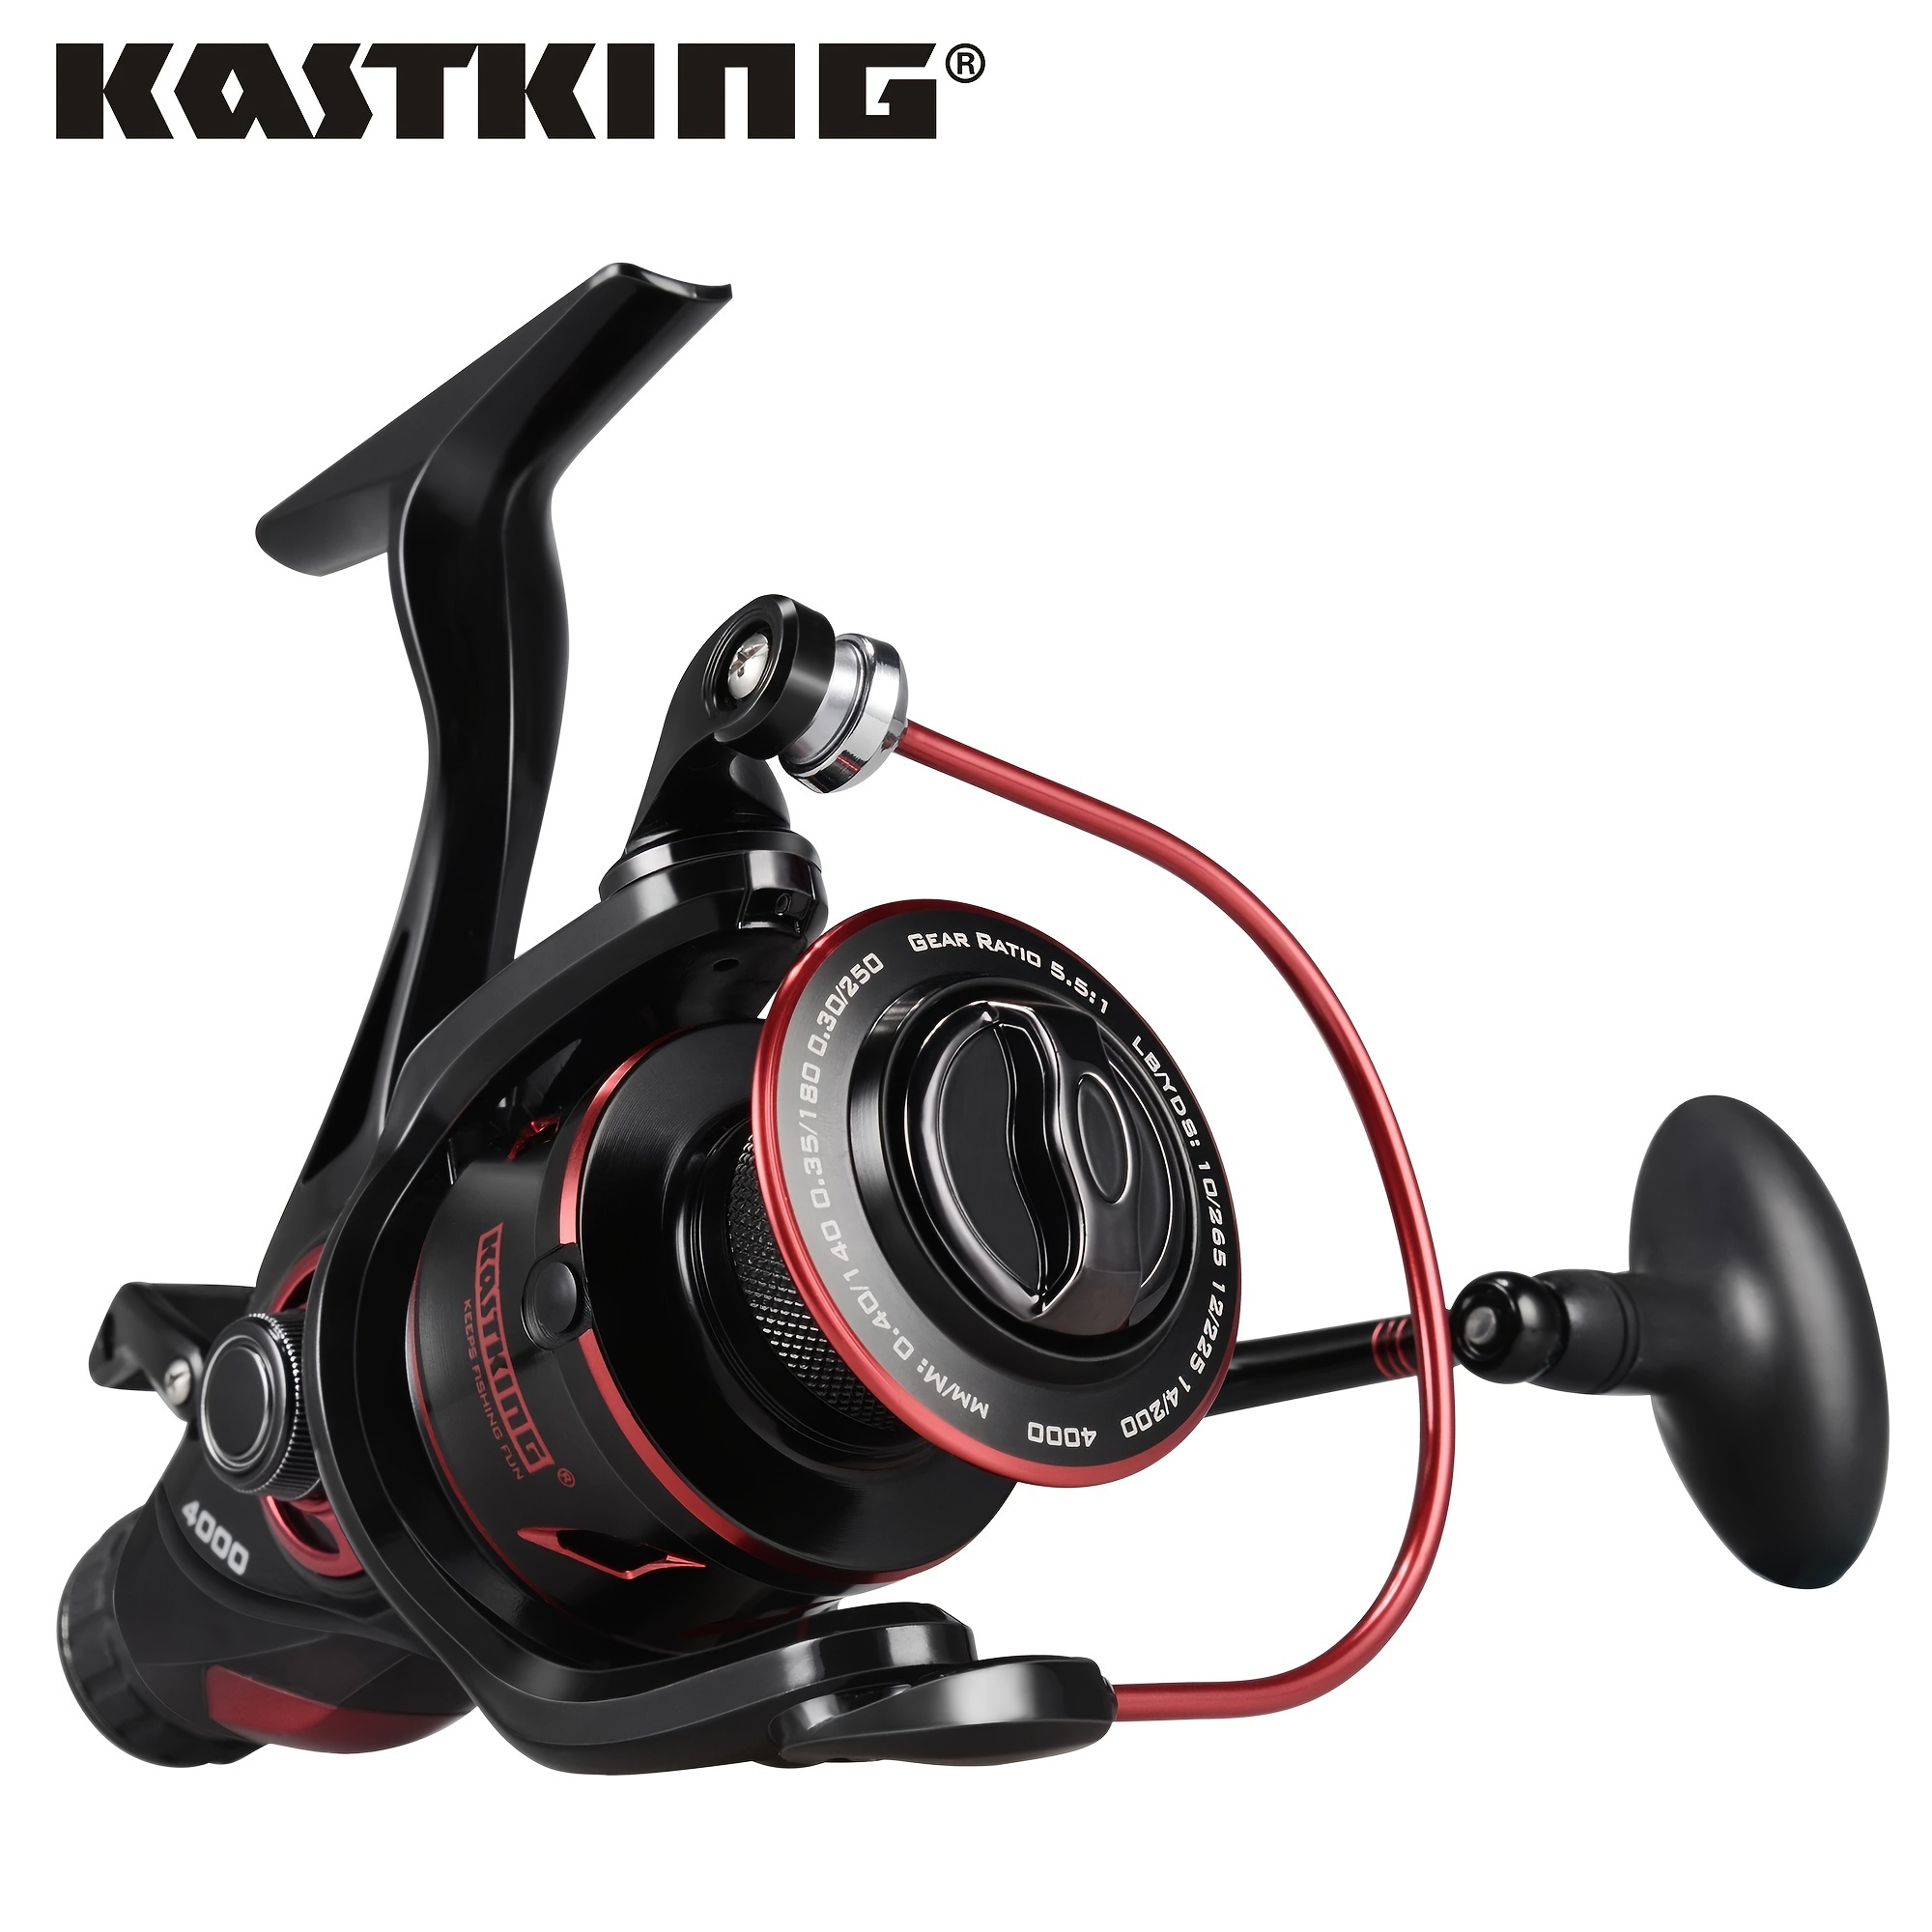 KastKing Megatron 200 Baitcasting Fishing Reel, Wide Spool High